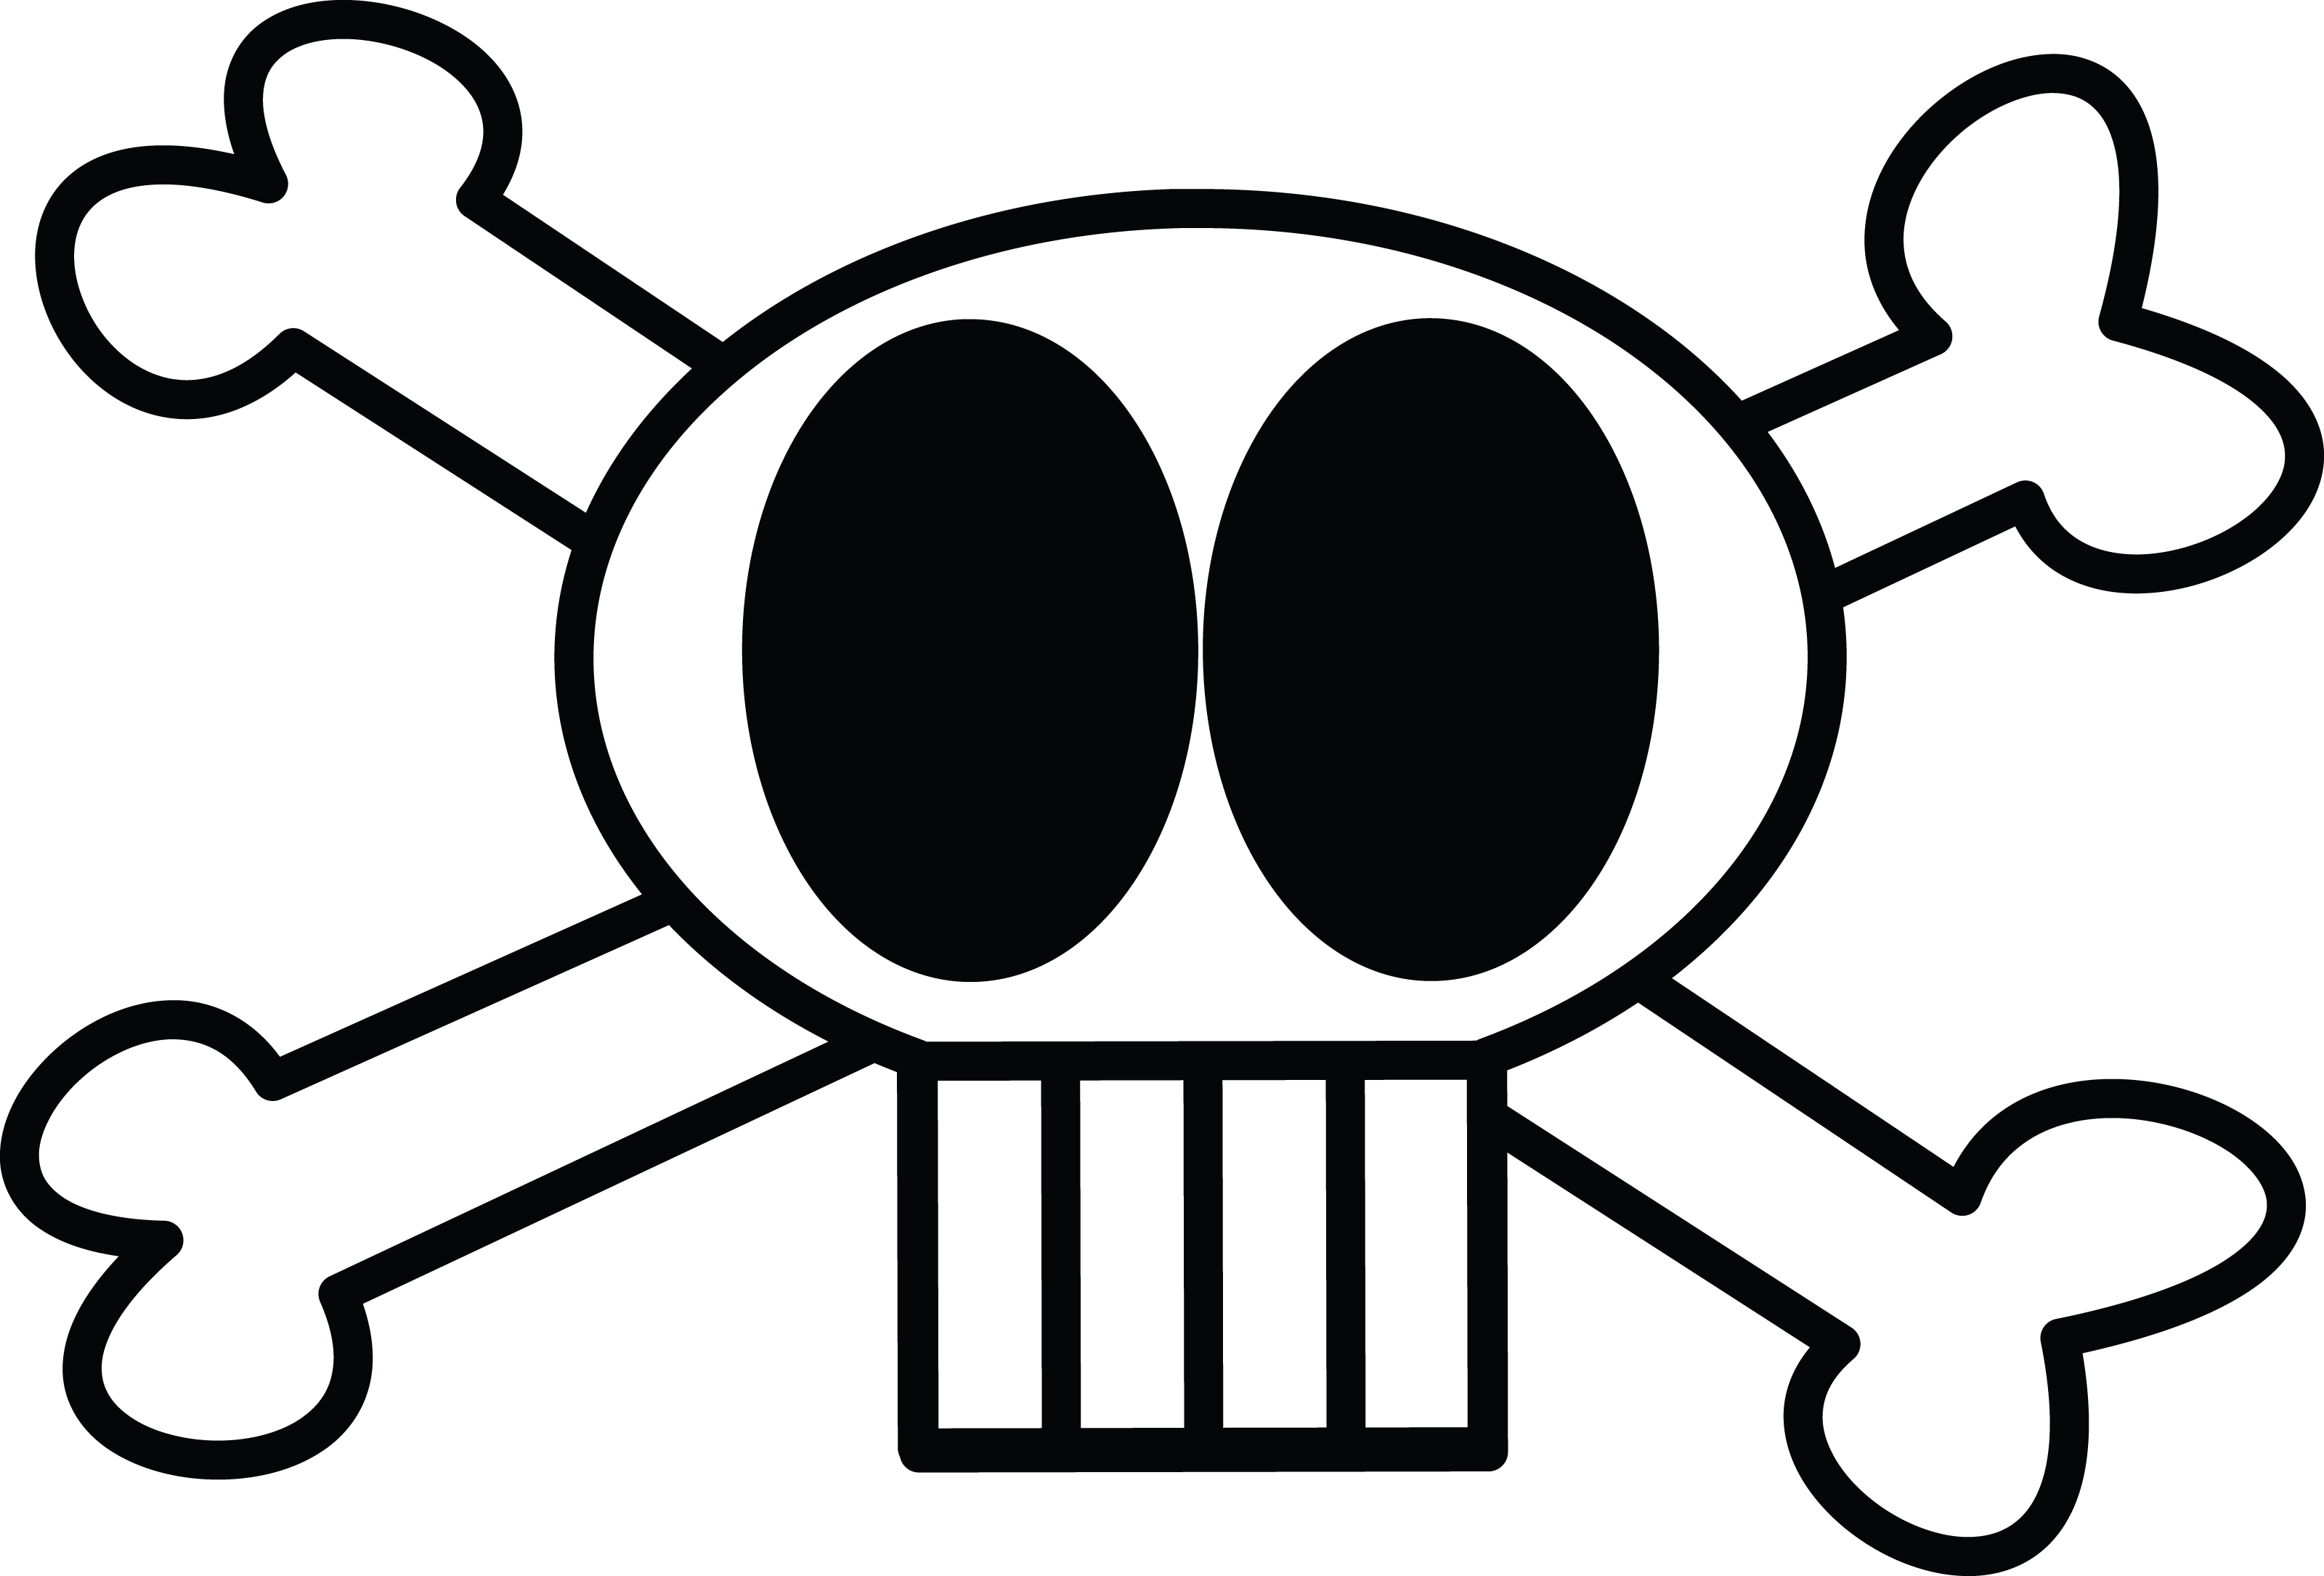 Skull And Crossbones Image | Free Download Clip Art | Free Clip ...